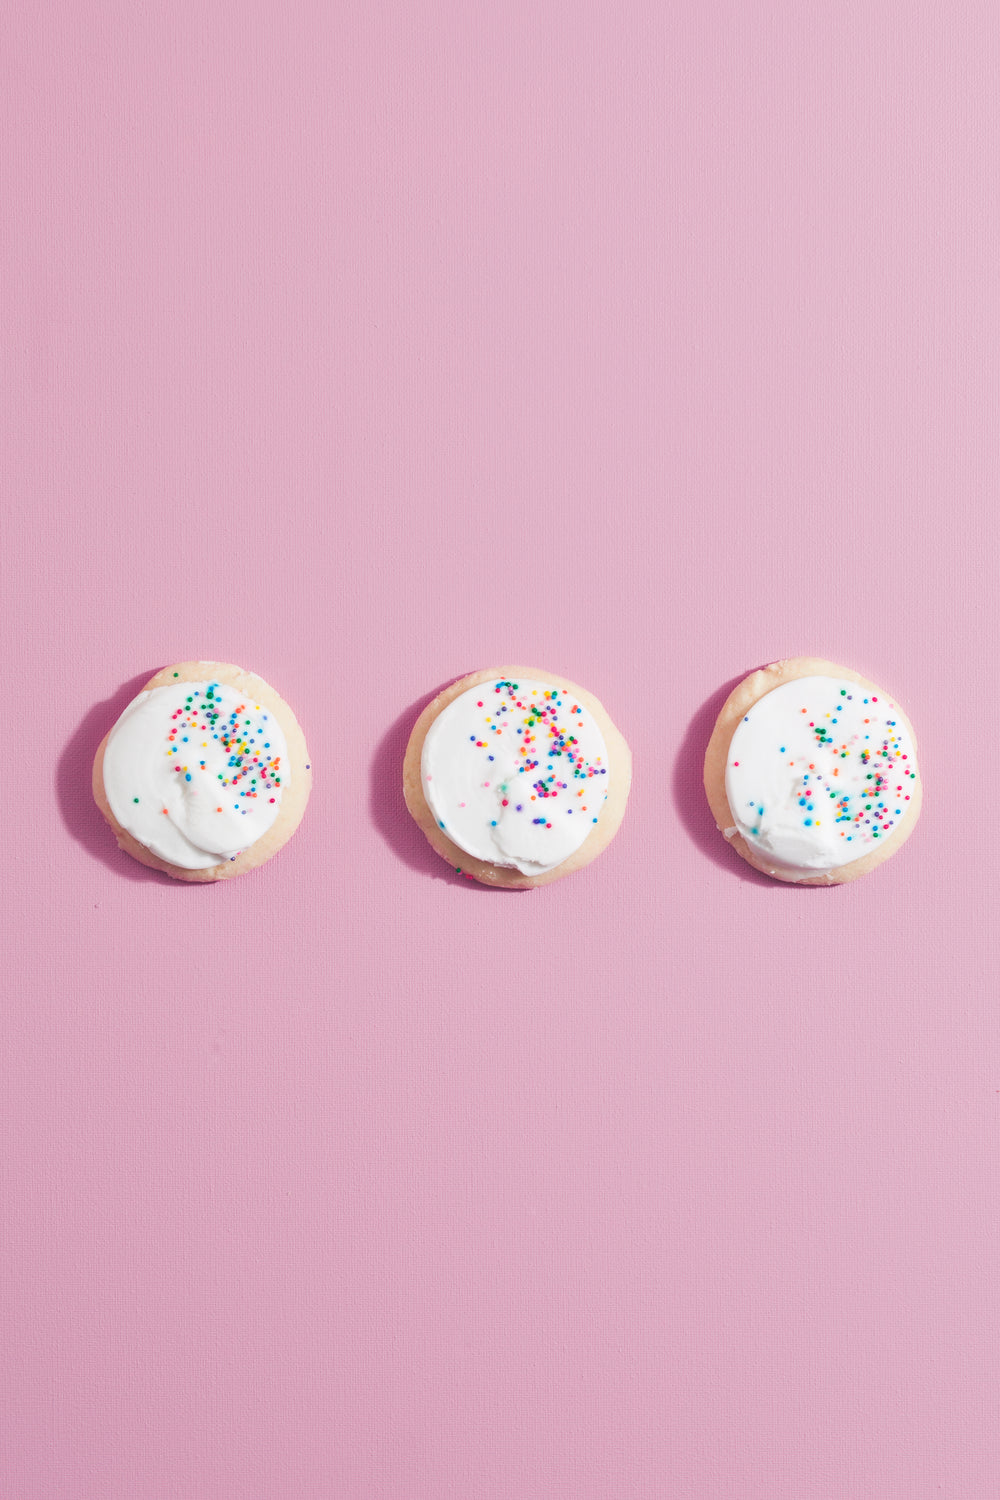 three cookies on pink